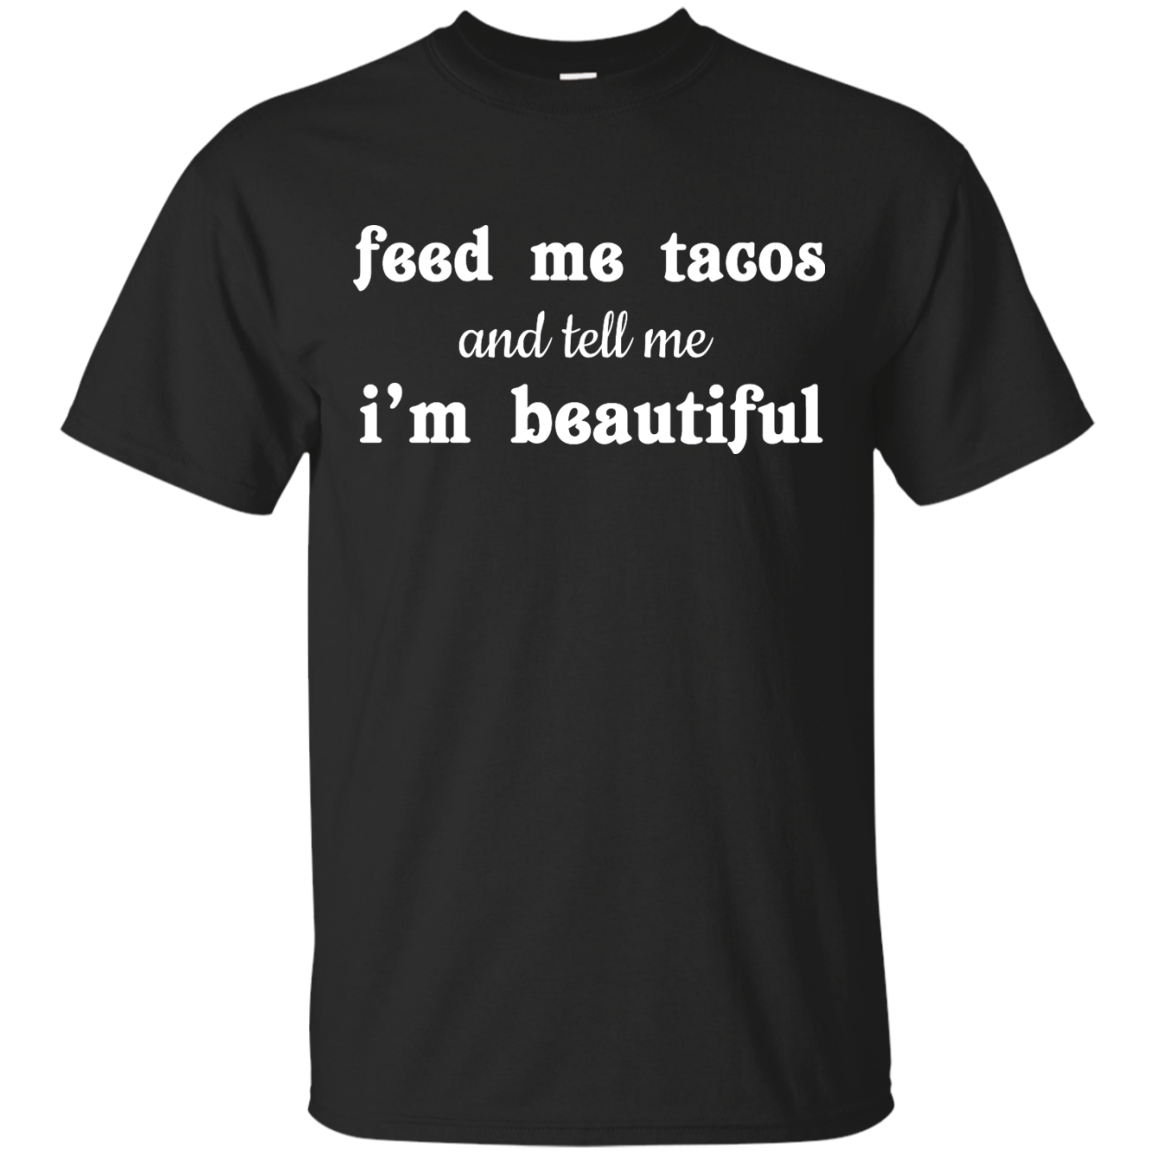 Feed Me Tacos and Tell Me I'm Beautiful shirt, tank